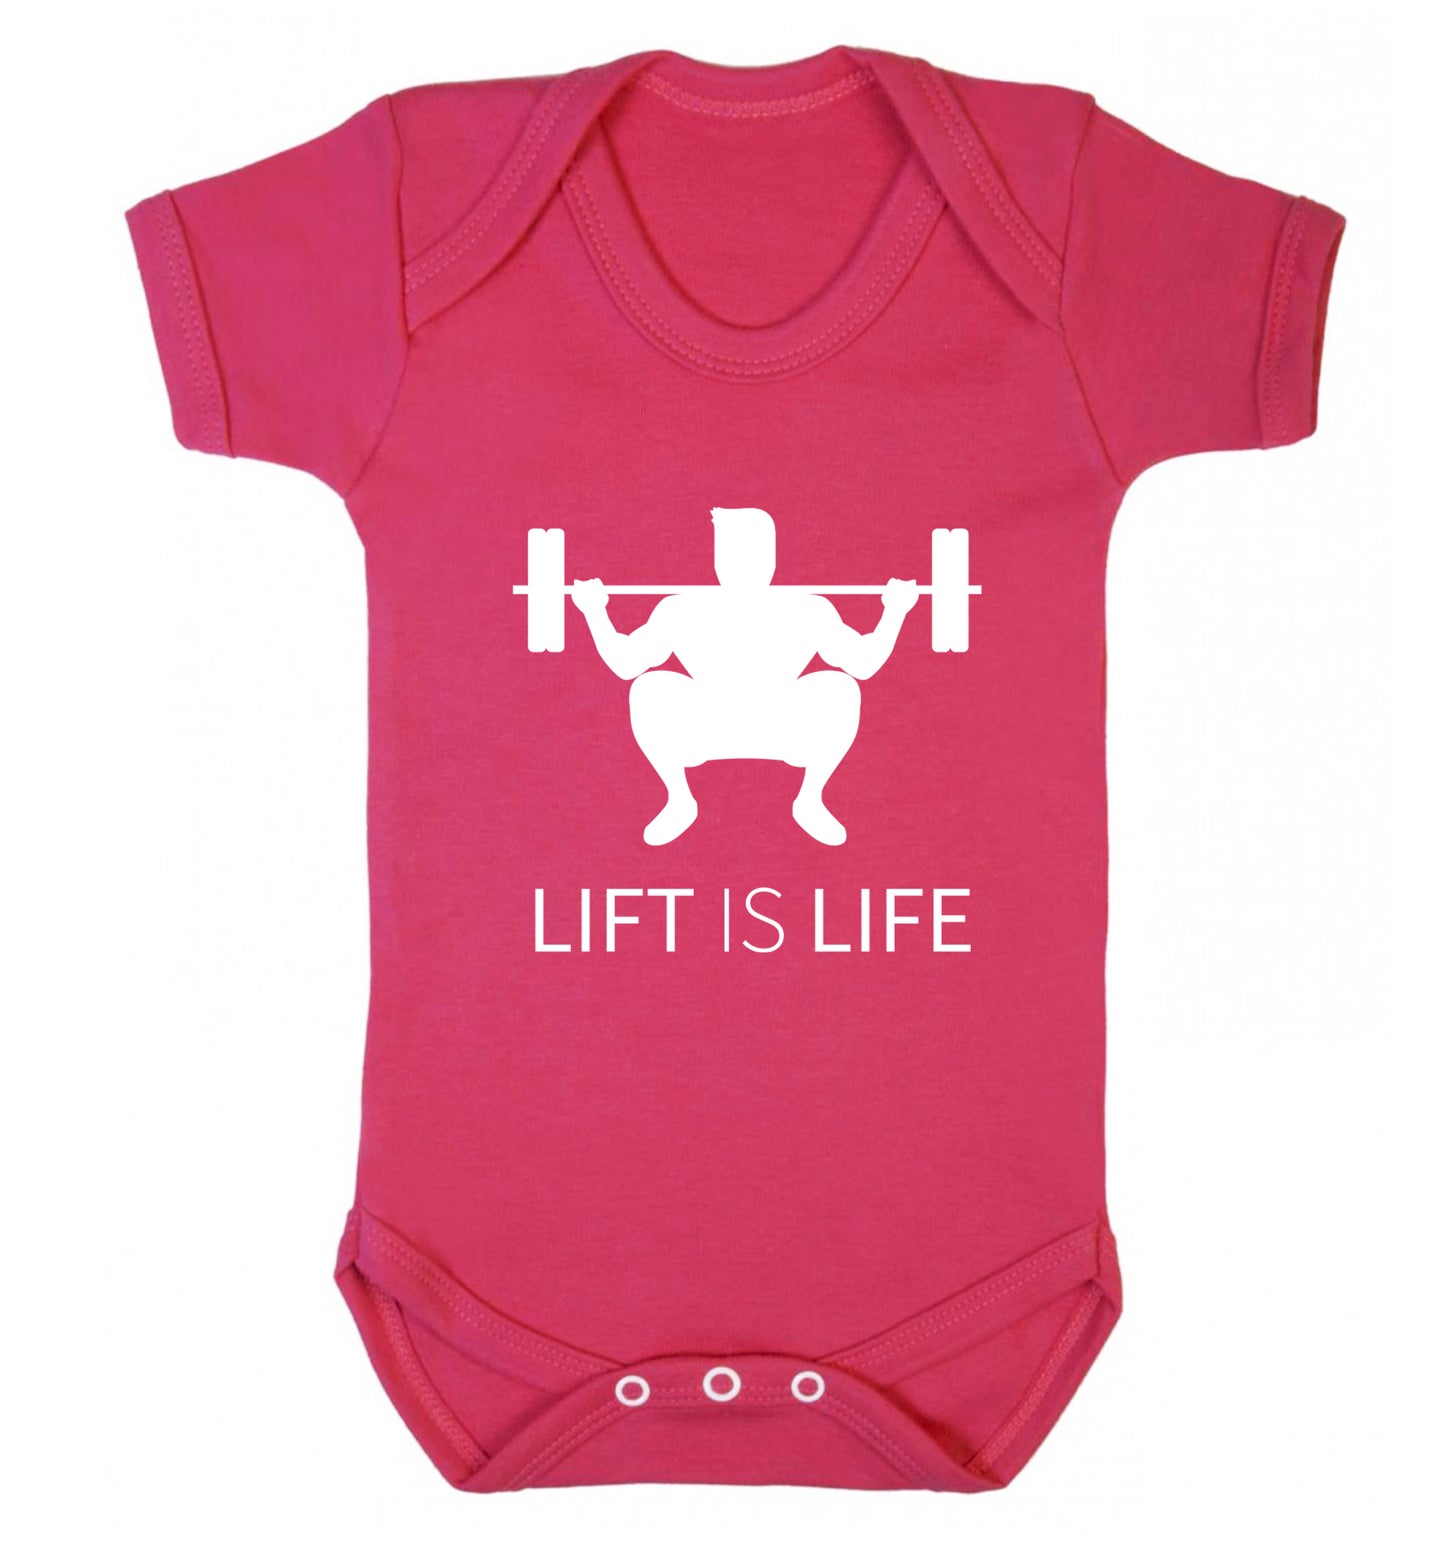 Lift is life Baby Vest dark pink 18-24 months